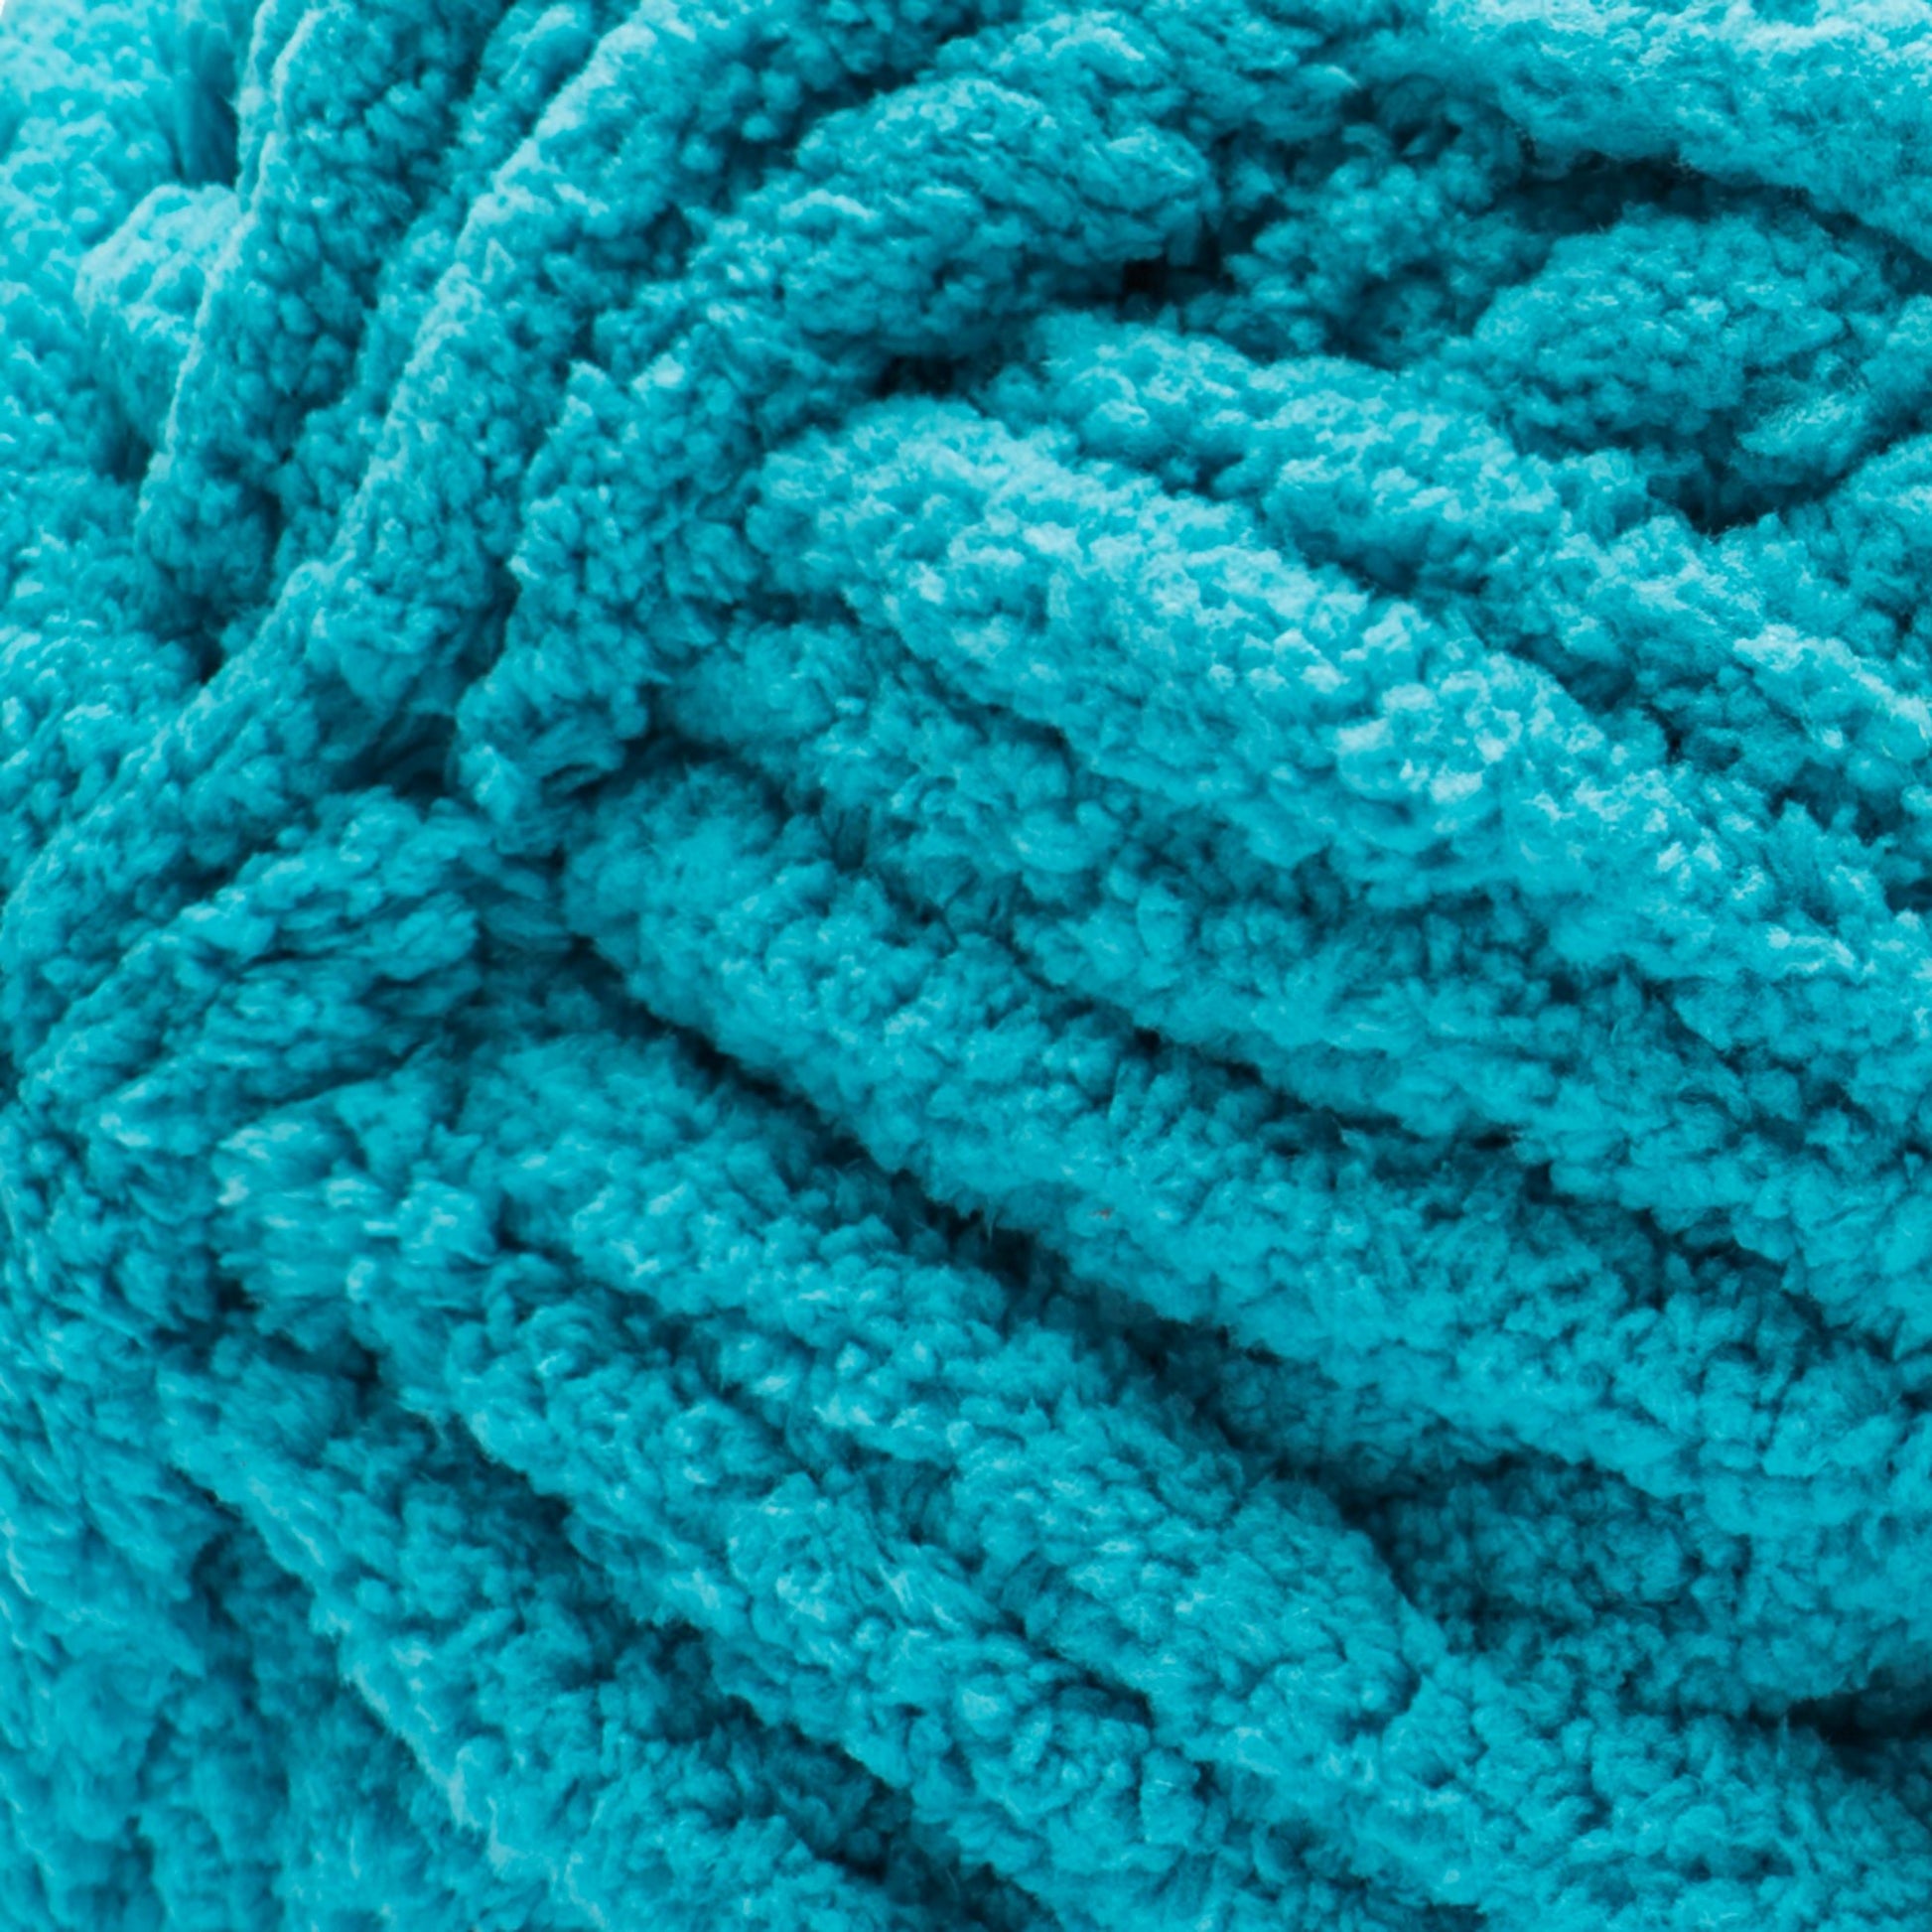 Bernat Blanket Extra Yarn (300g/10.5oz) Bright Blue